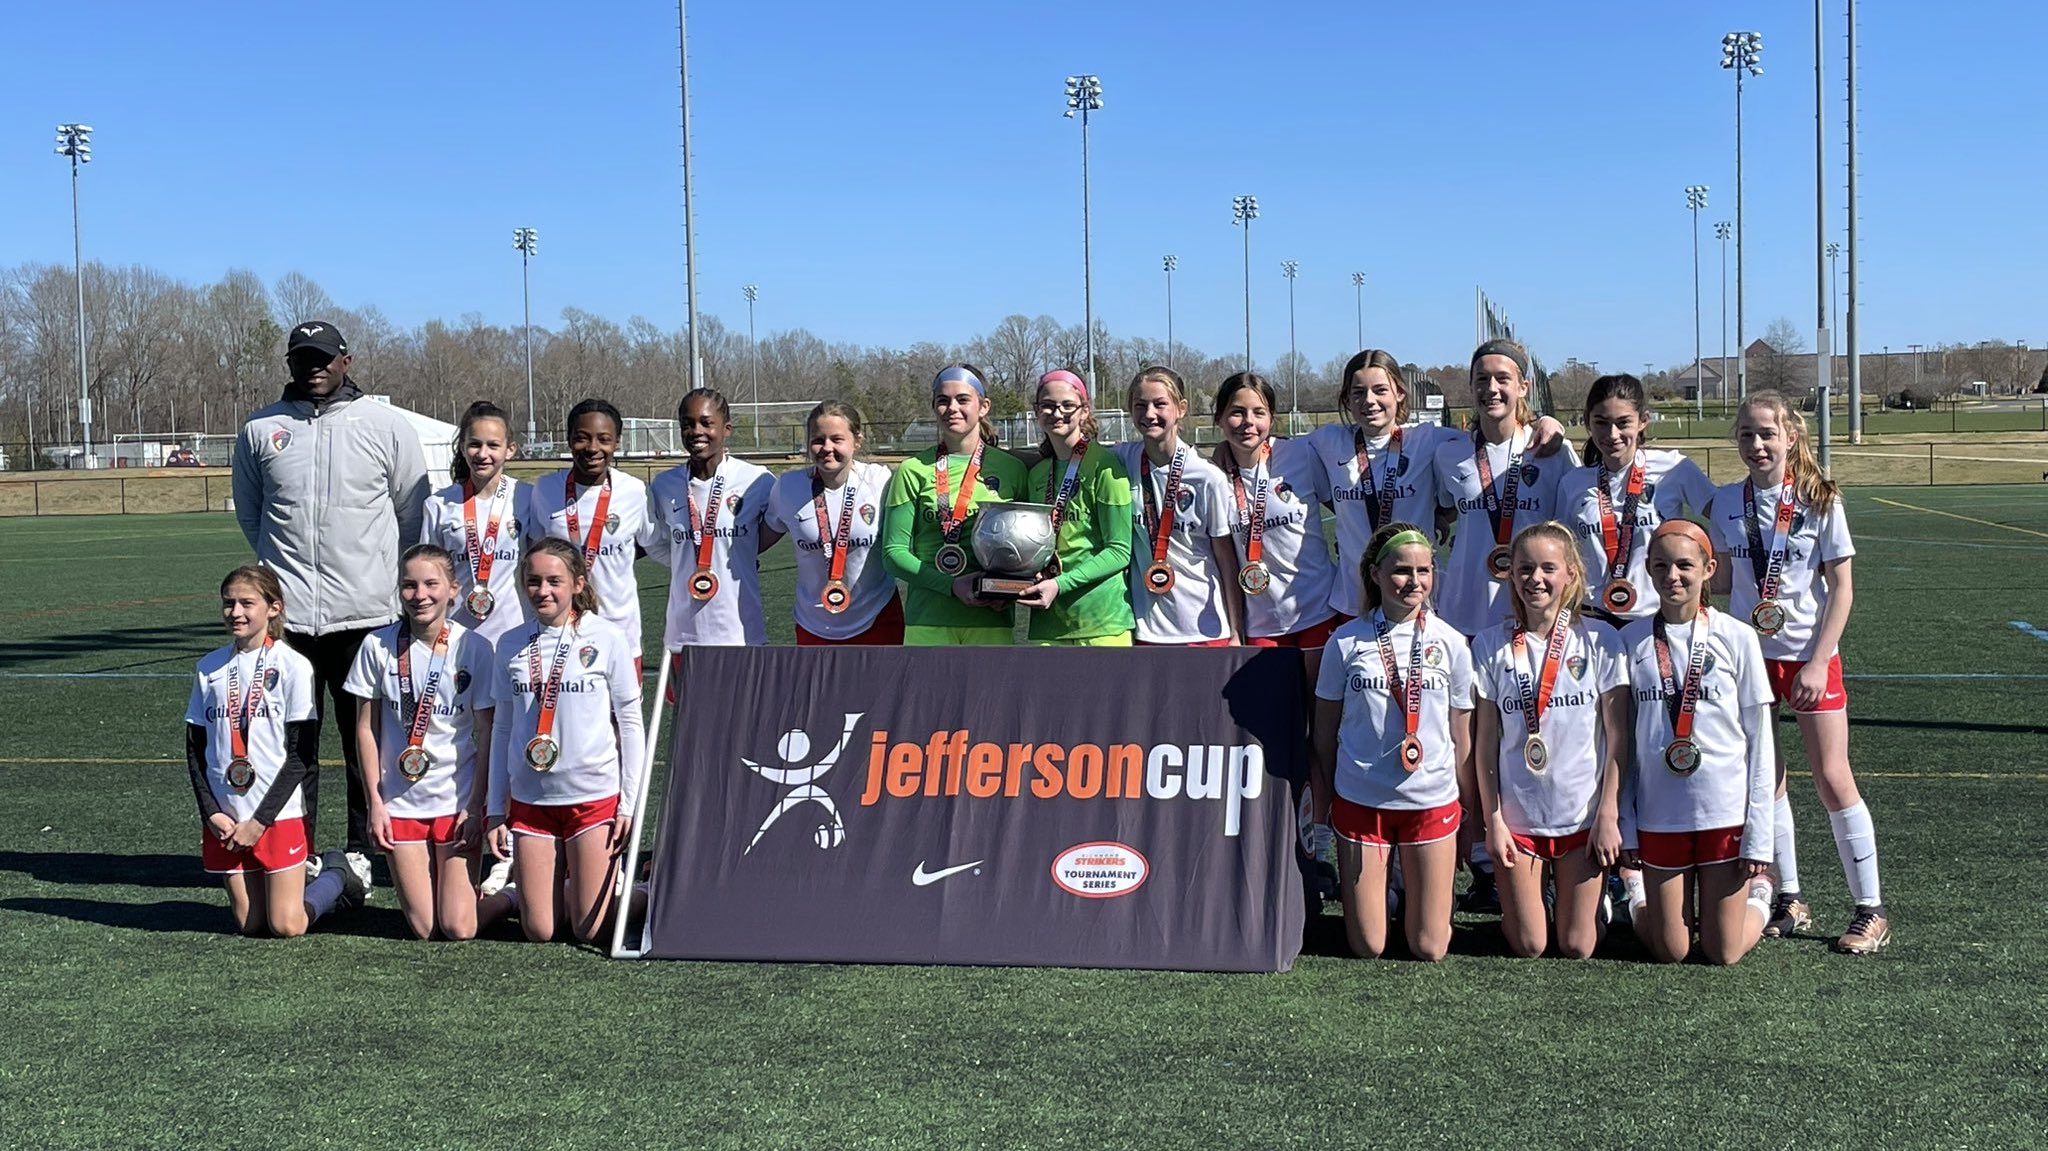 Jefferson Cup U9U14 Girls Weekend sees teams from 40 clubs win